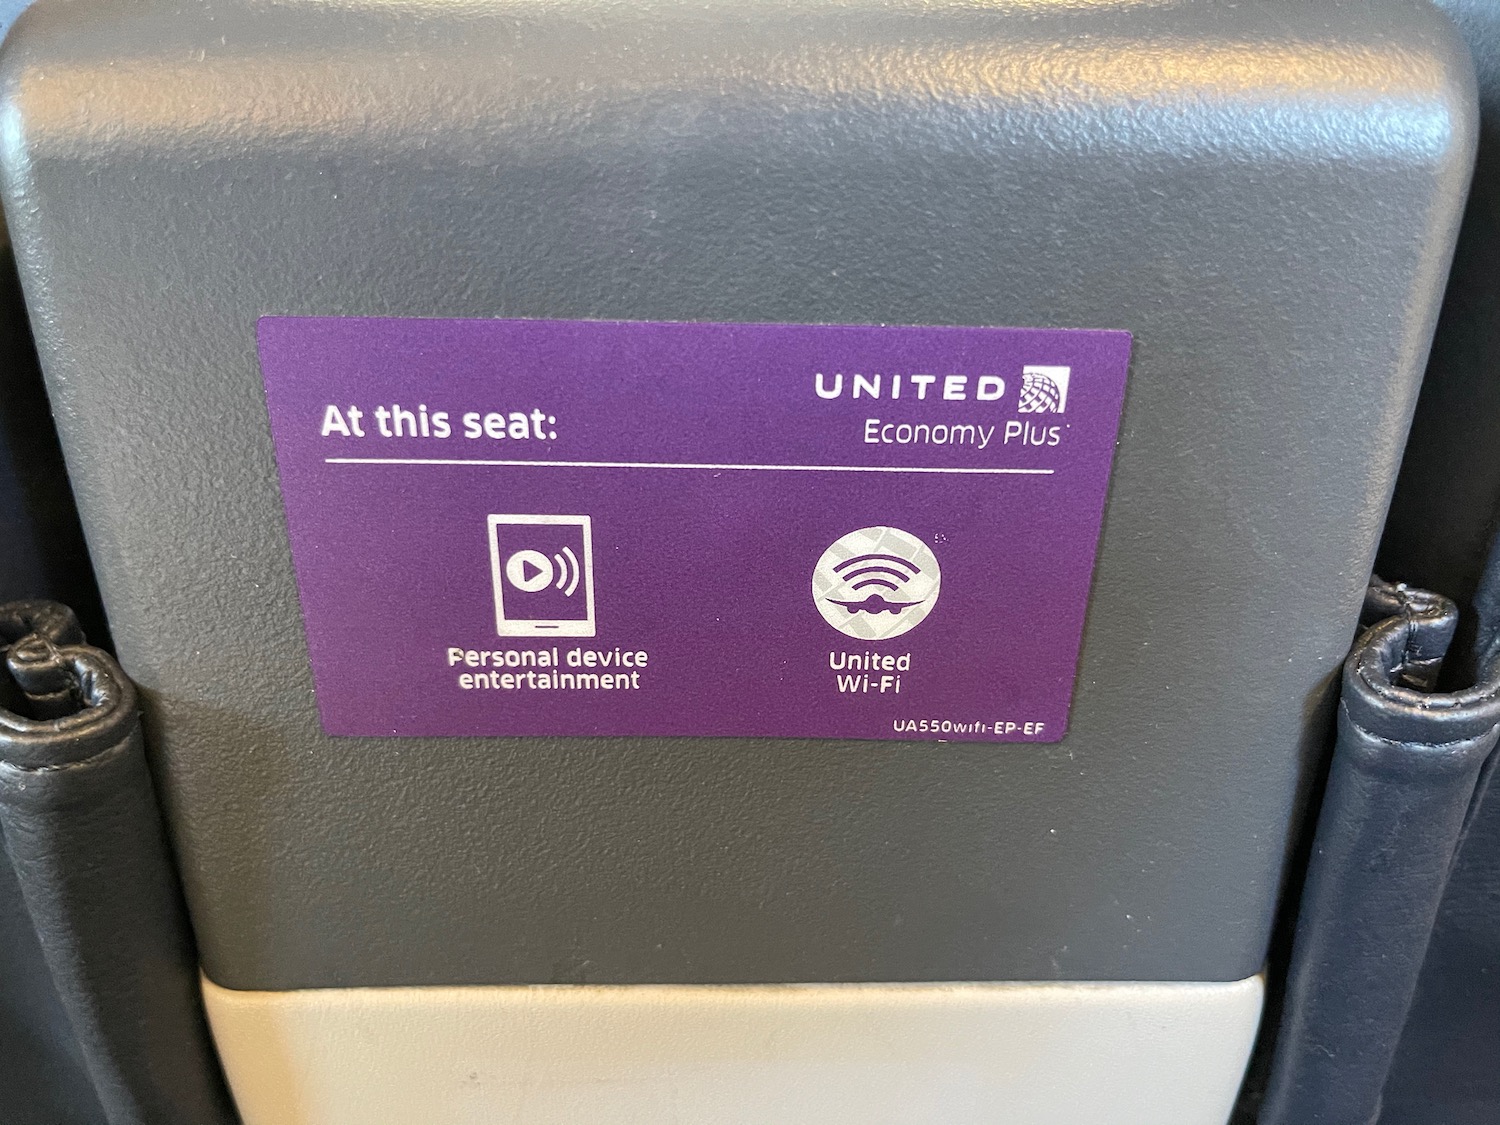 a purple sticker on a grey surface